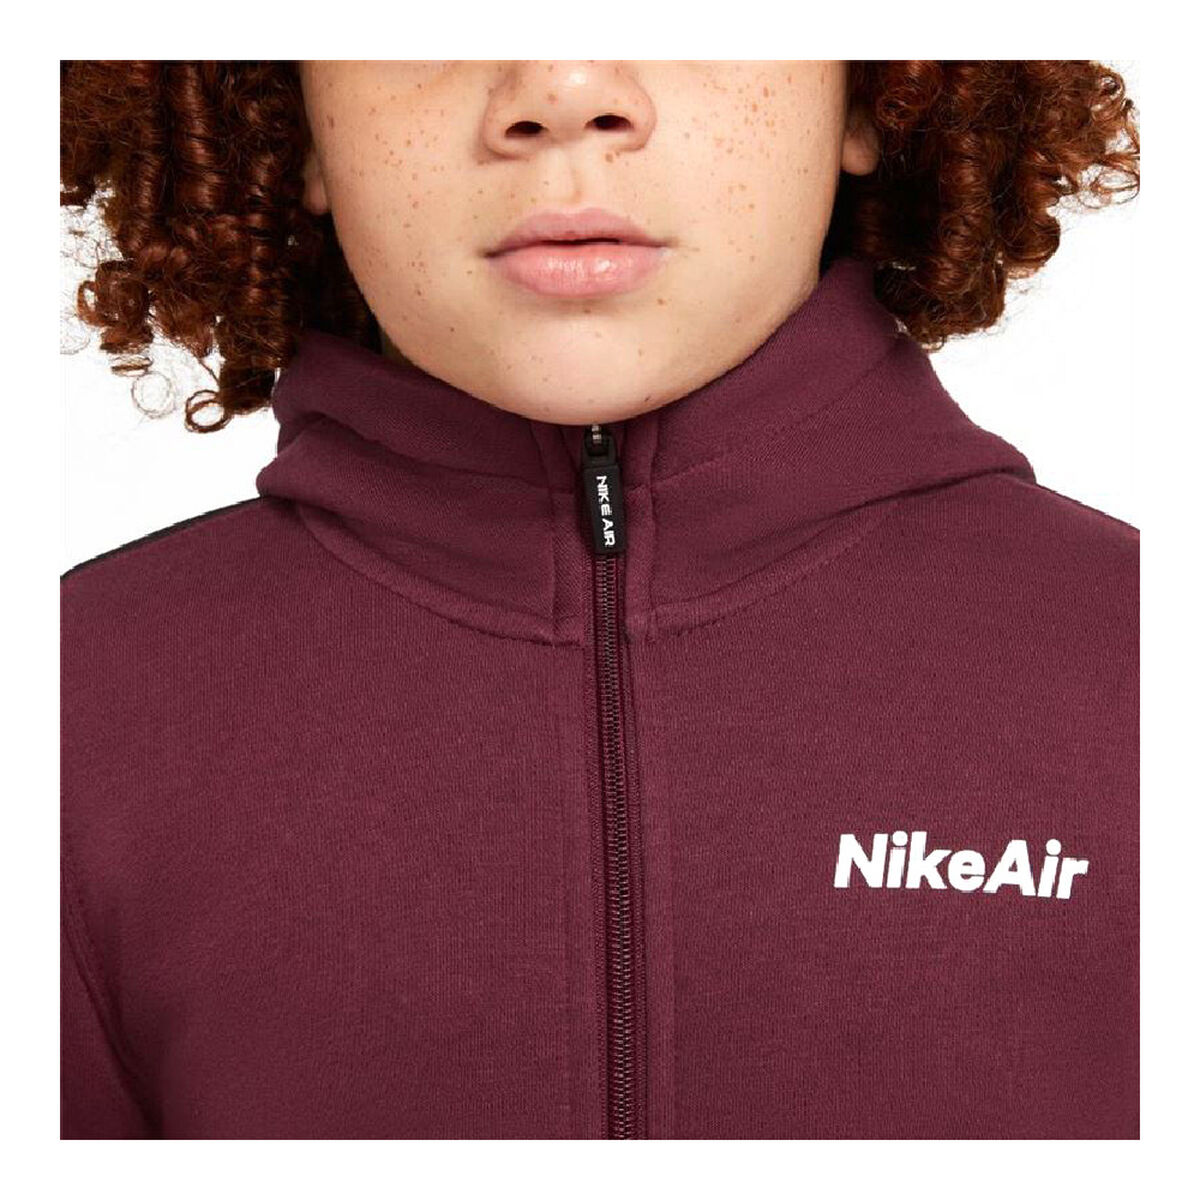 Children's Sports Jacket Nike Air Maroon